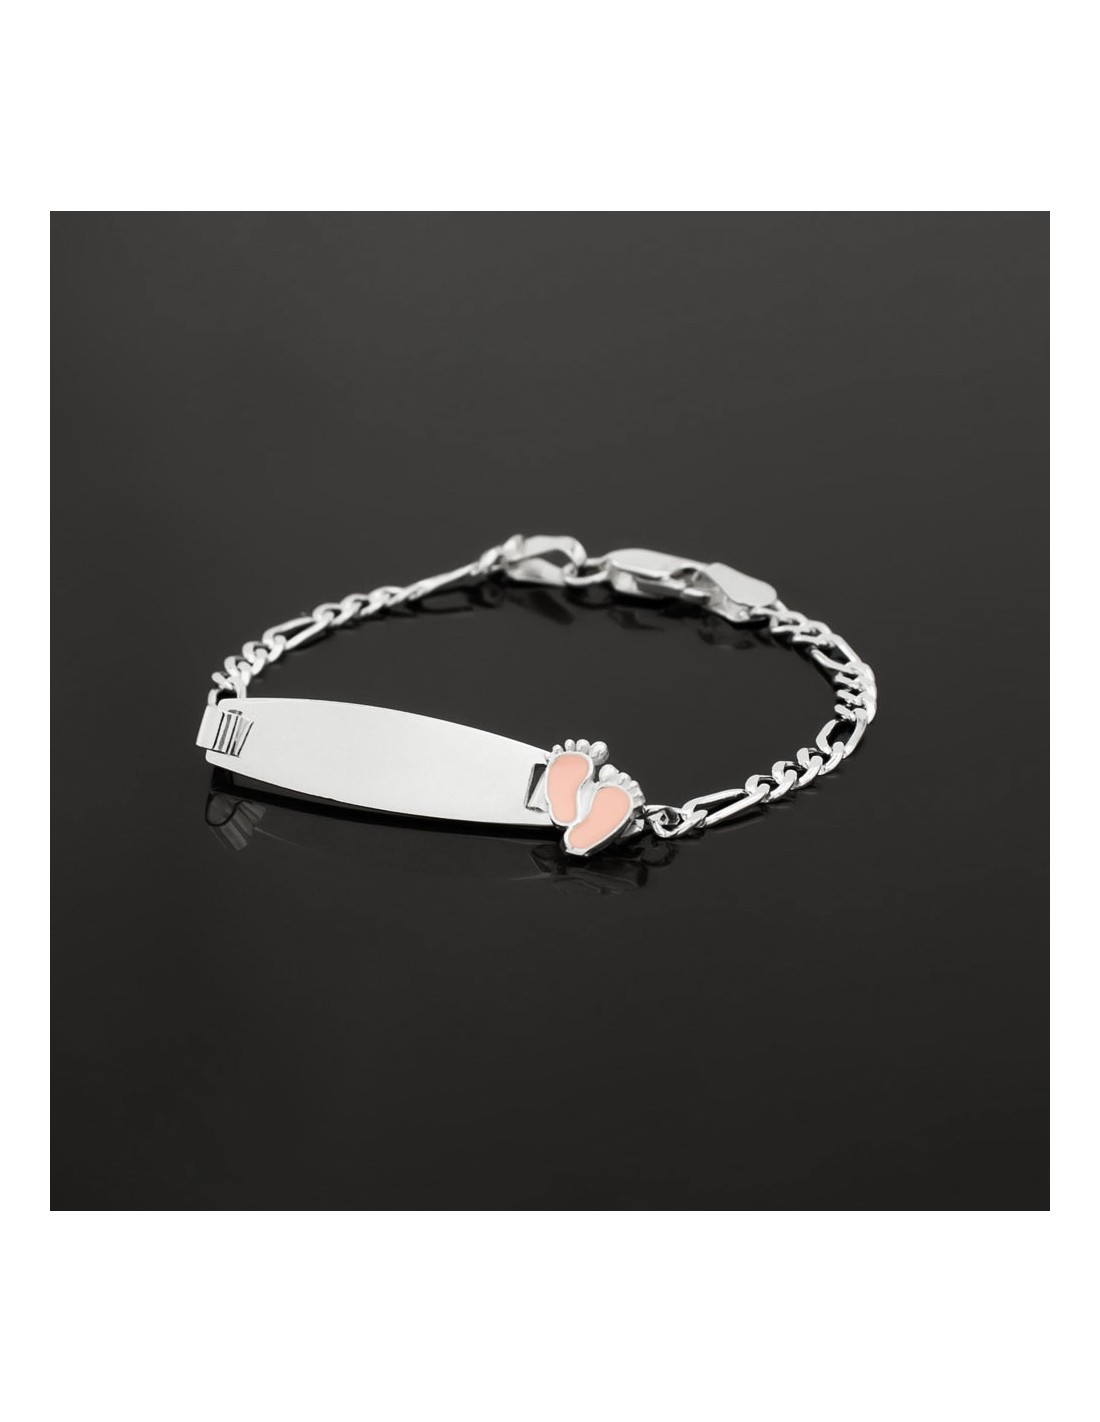 Triple Heart Initial Bracelet | Name Bracelet | Pin it Up online gifts